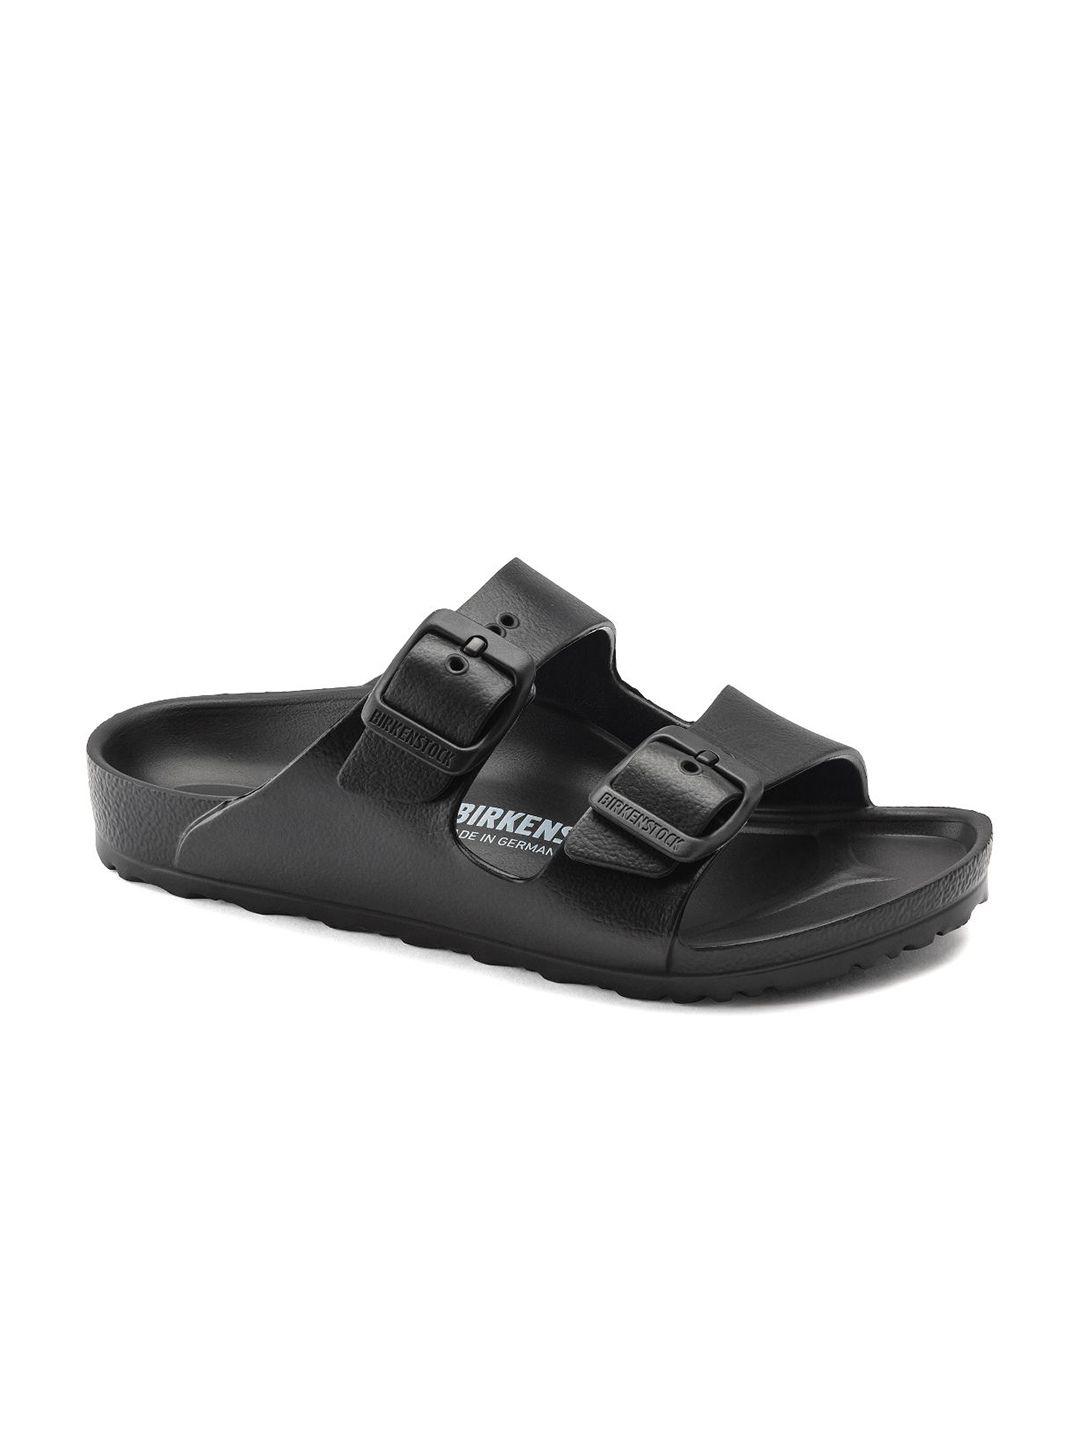 birkenstock girls arizona essentials eva black narrow width leather open toe flats